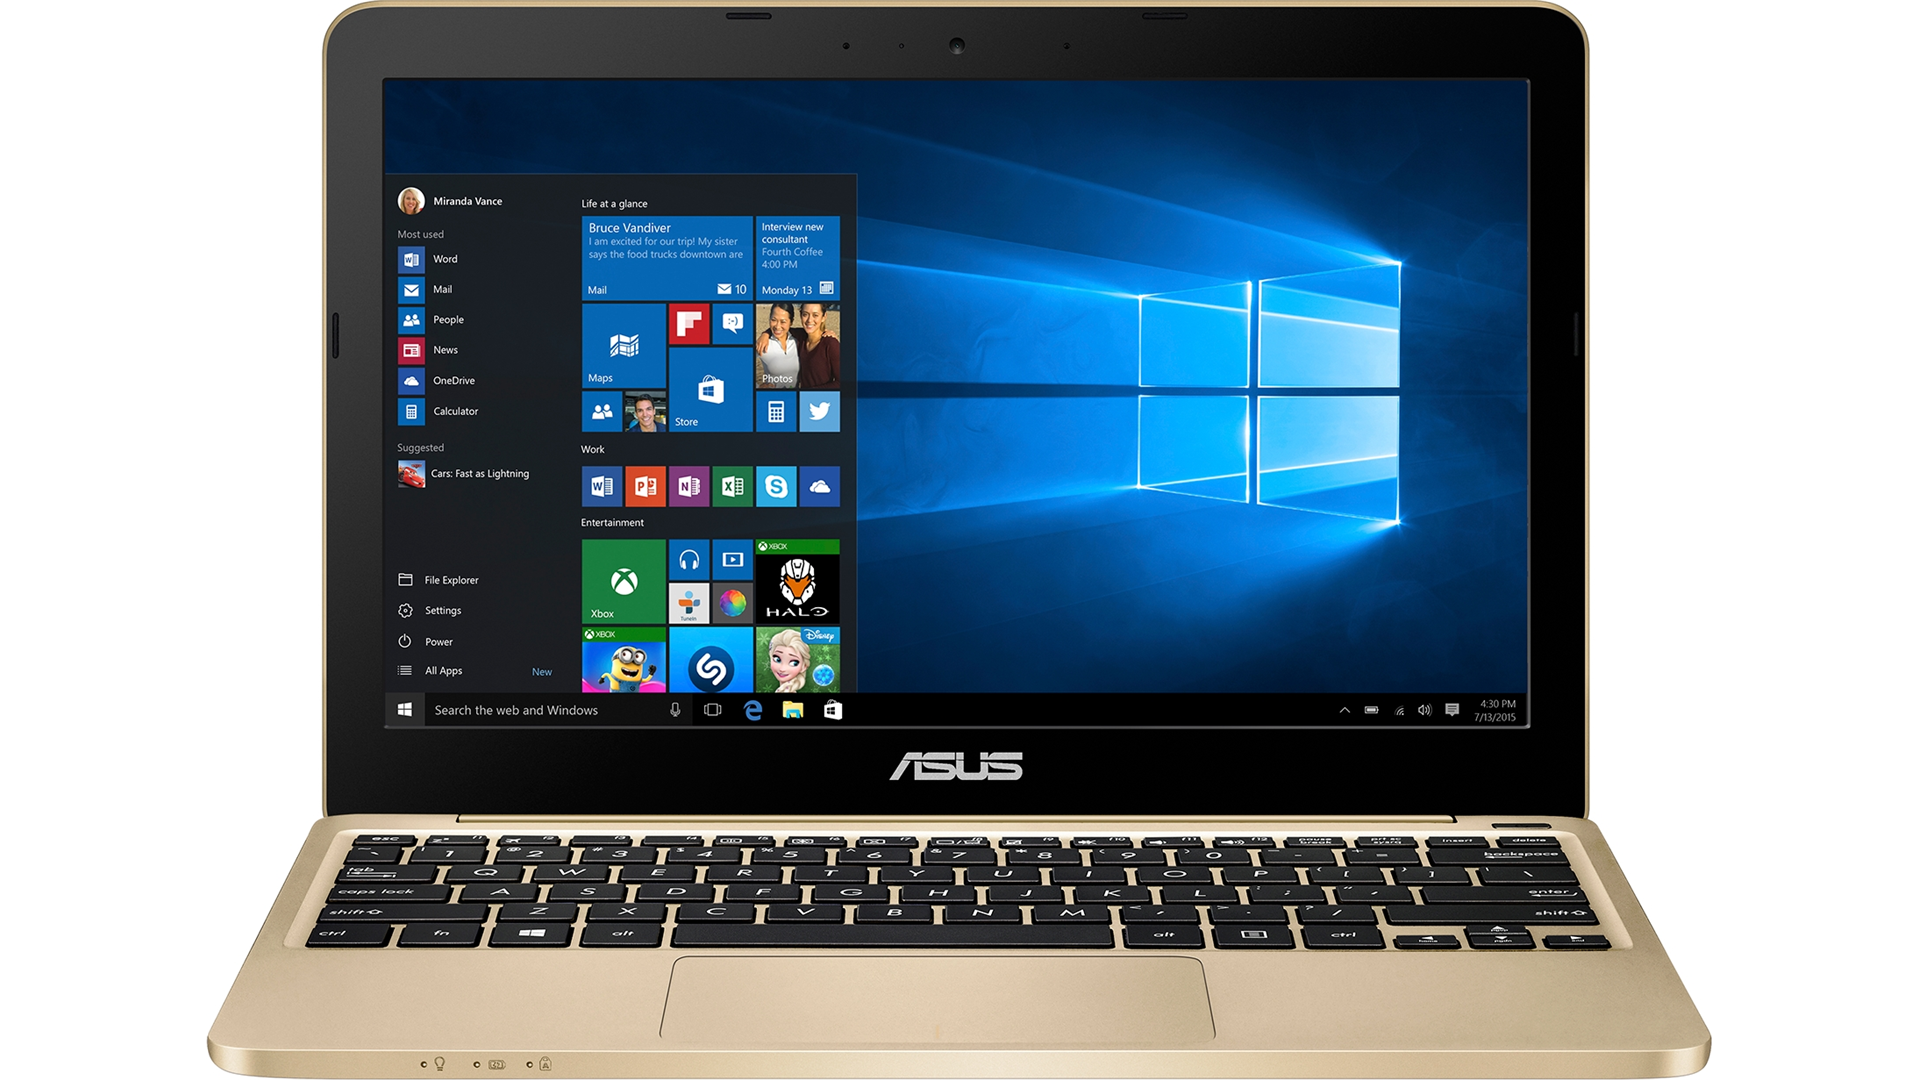 Asus VivoBook E200HA-FD0009TS - Notebookcheck.net External Reviews